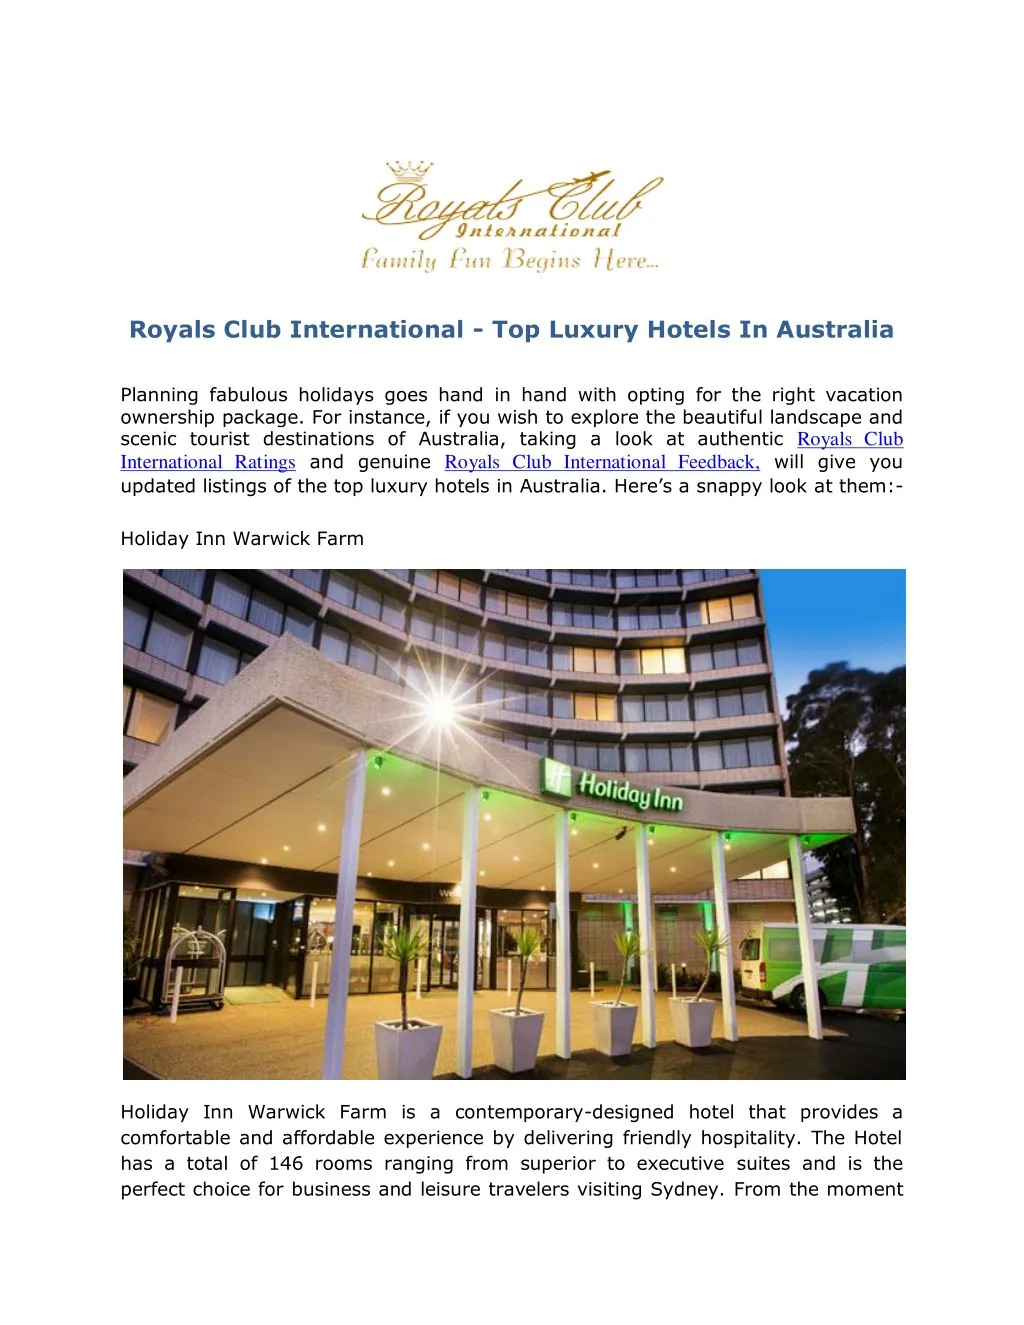 royals club international top luxury hotels